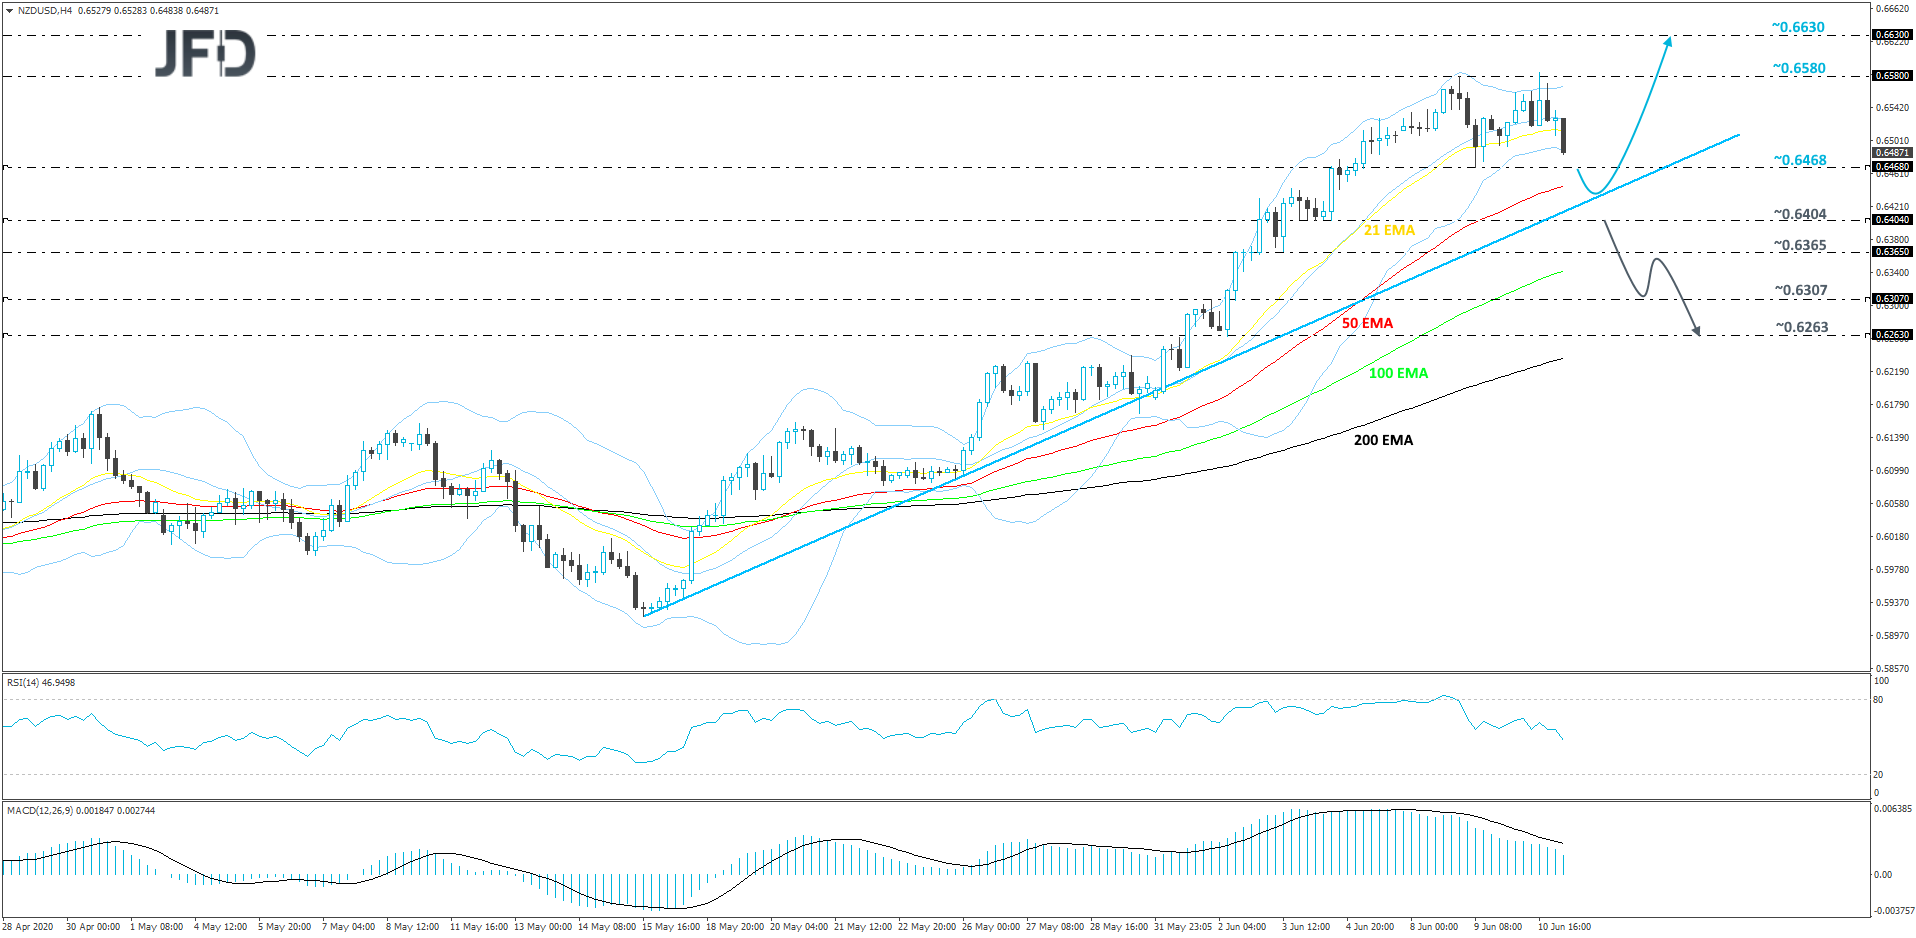 NZD/USD 4-hour chart technical analysis